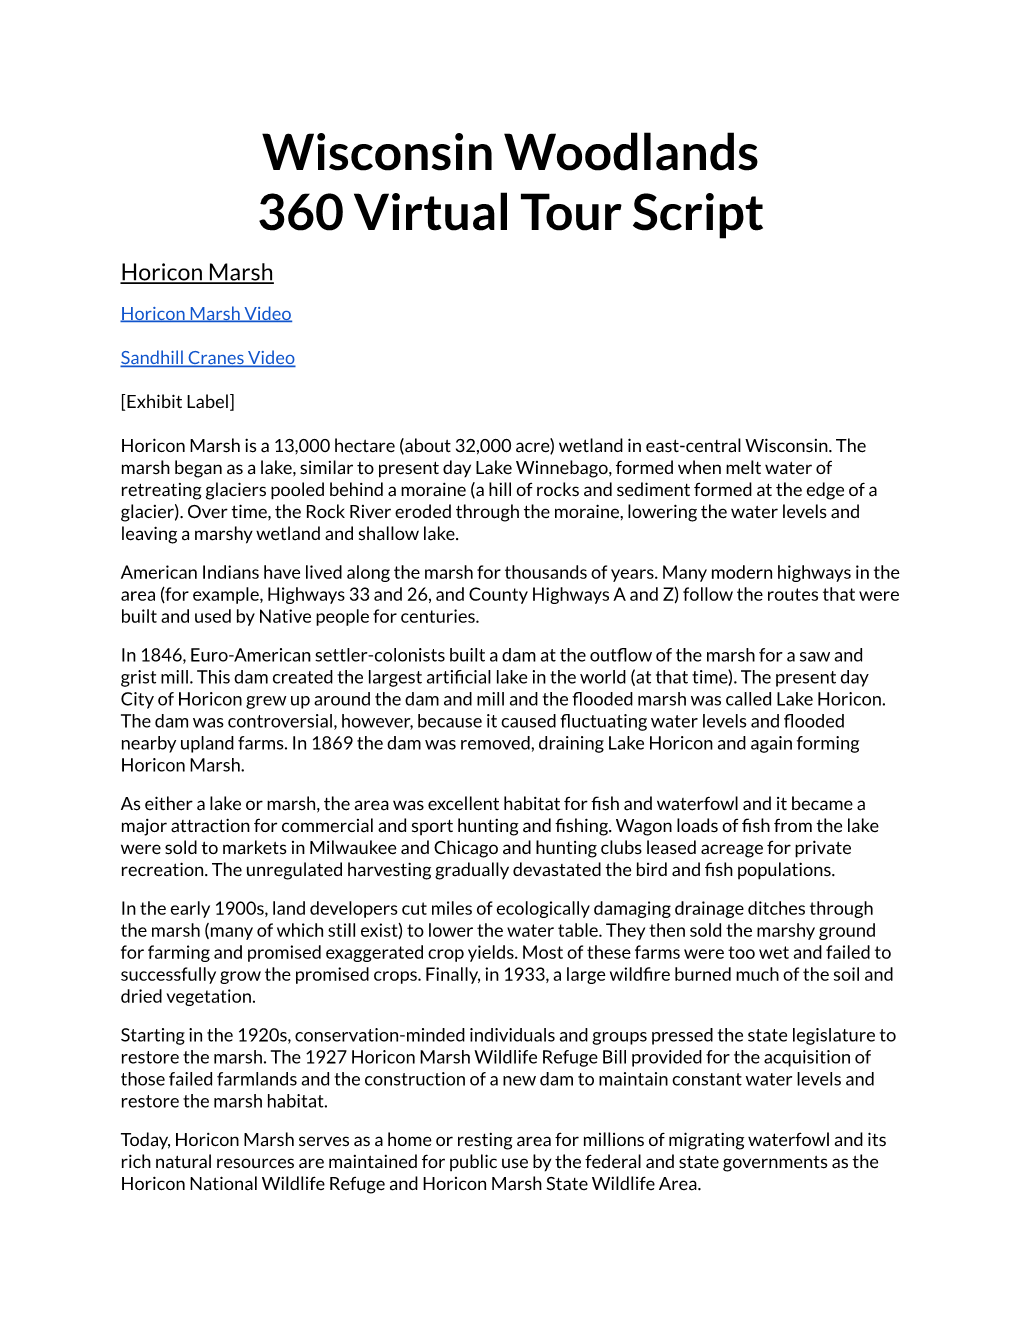 Wisconsin Woodlands 360 Virtual Tour Script Horicon Marsh